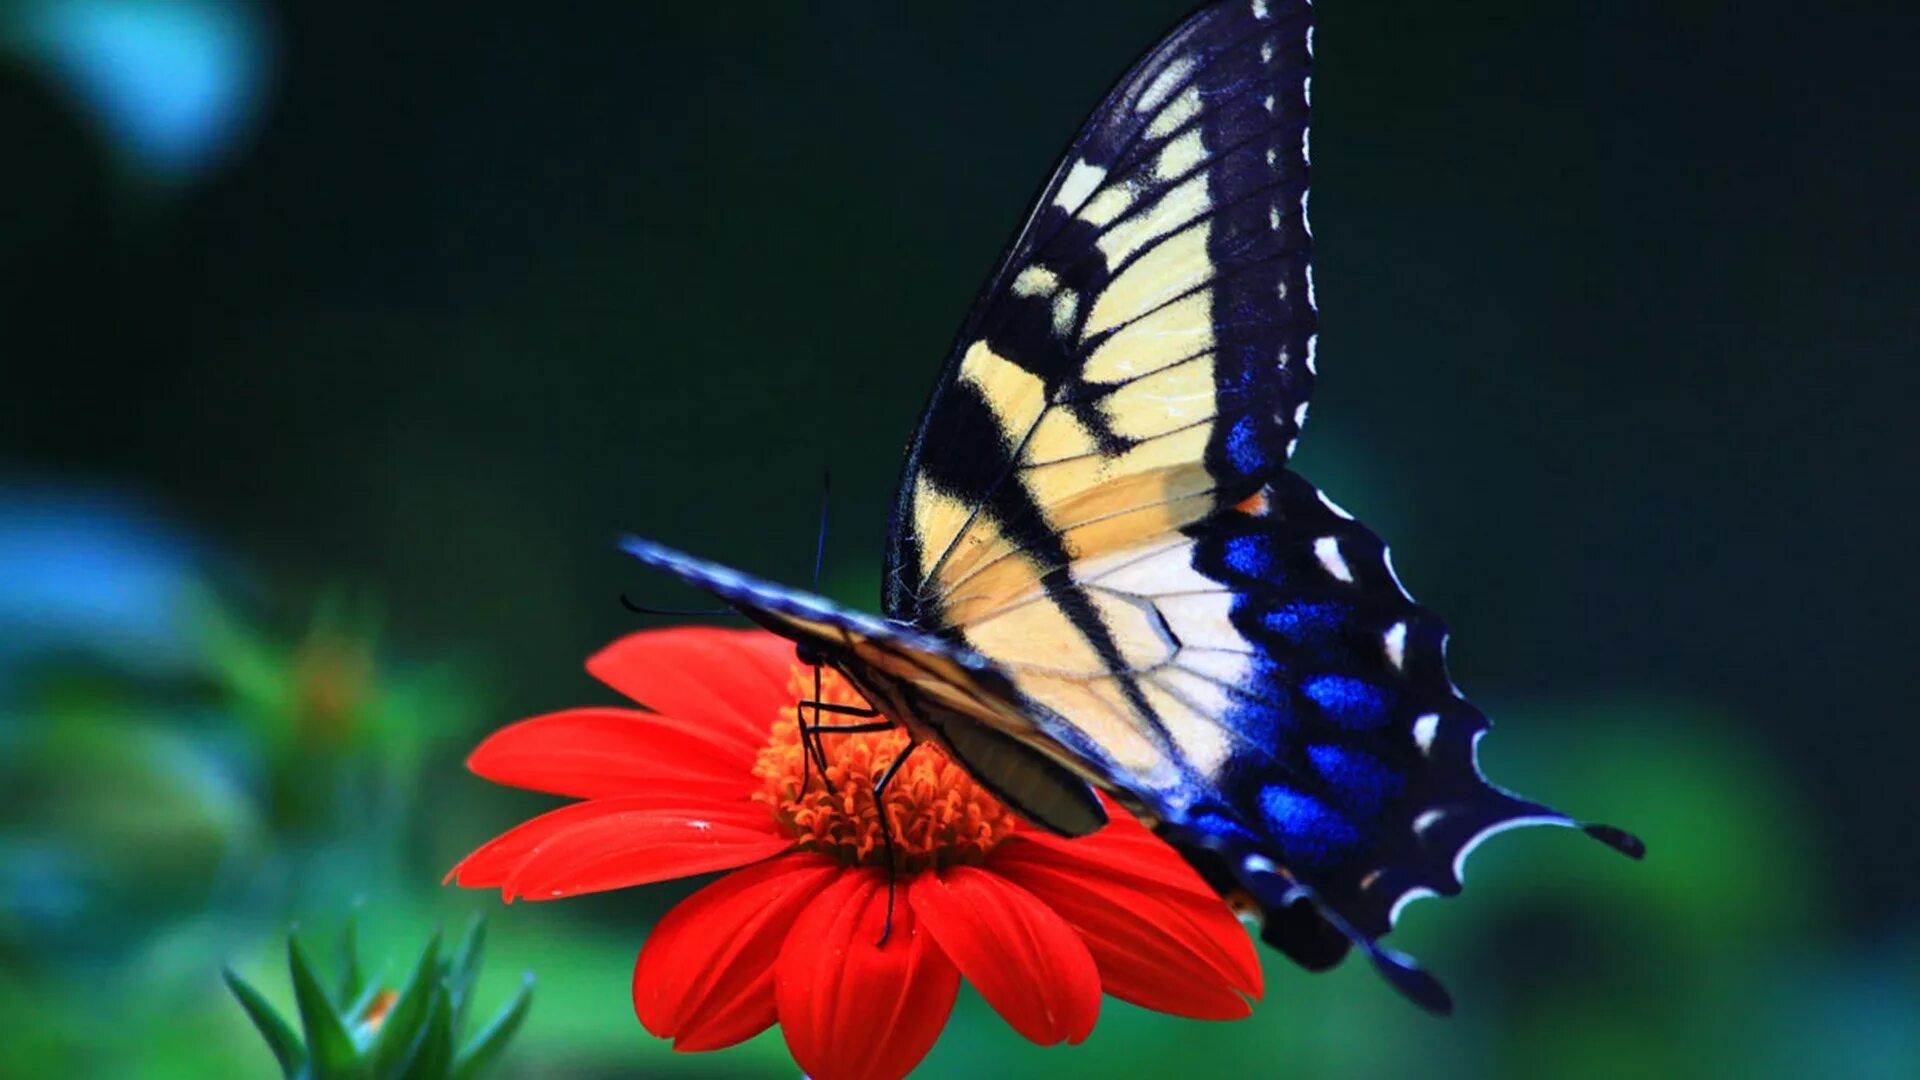 Бабочки на весь экран. Бабочки. Бабочка на цветке. Обои с бабочками. Синяя бабочка на цветке.